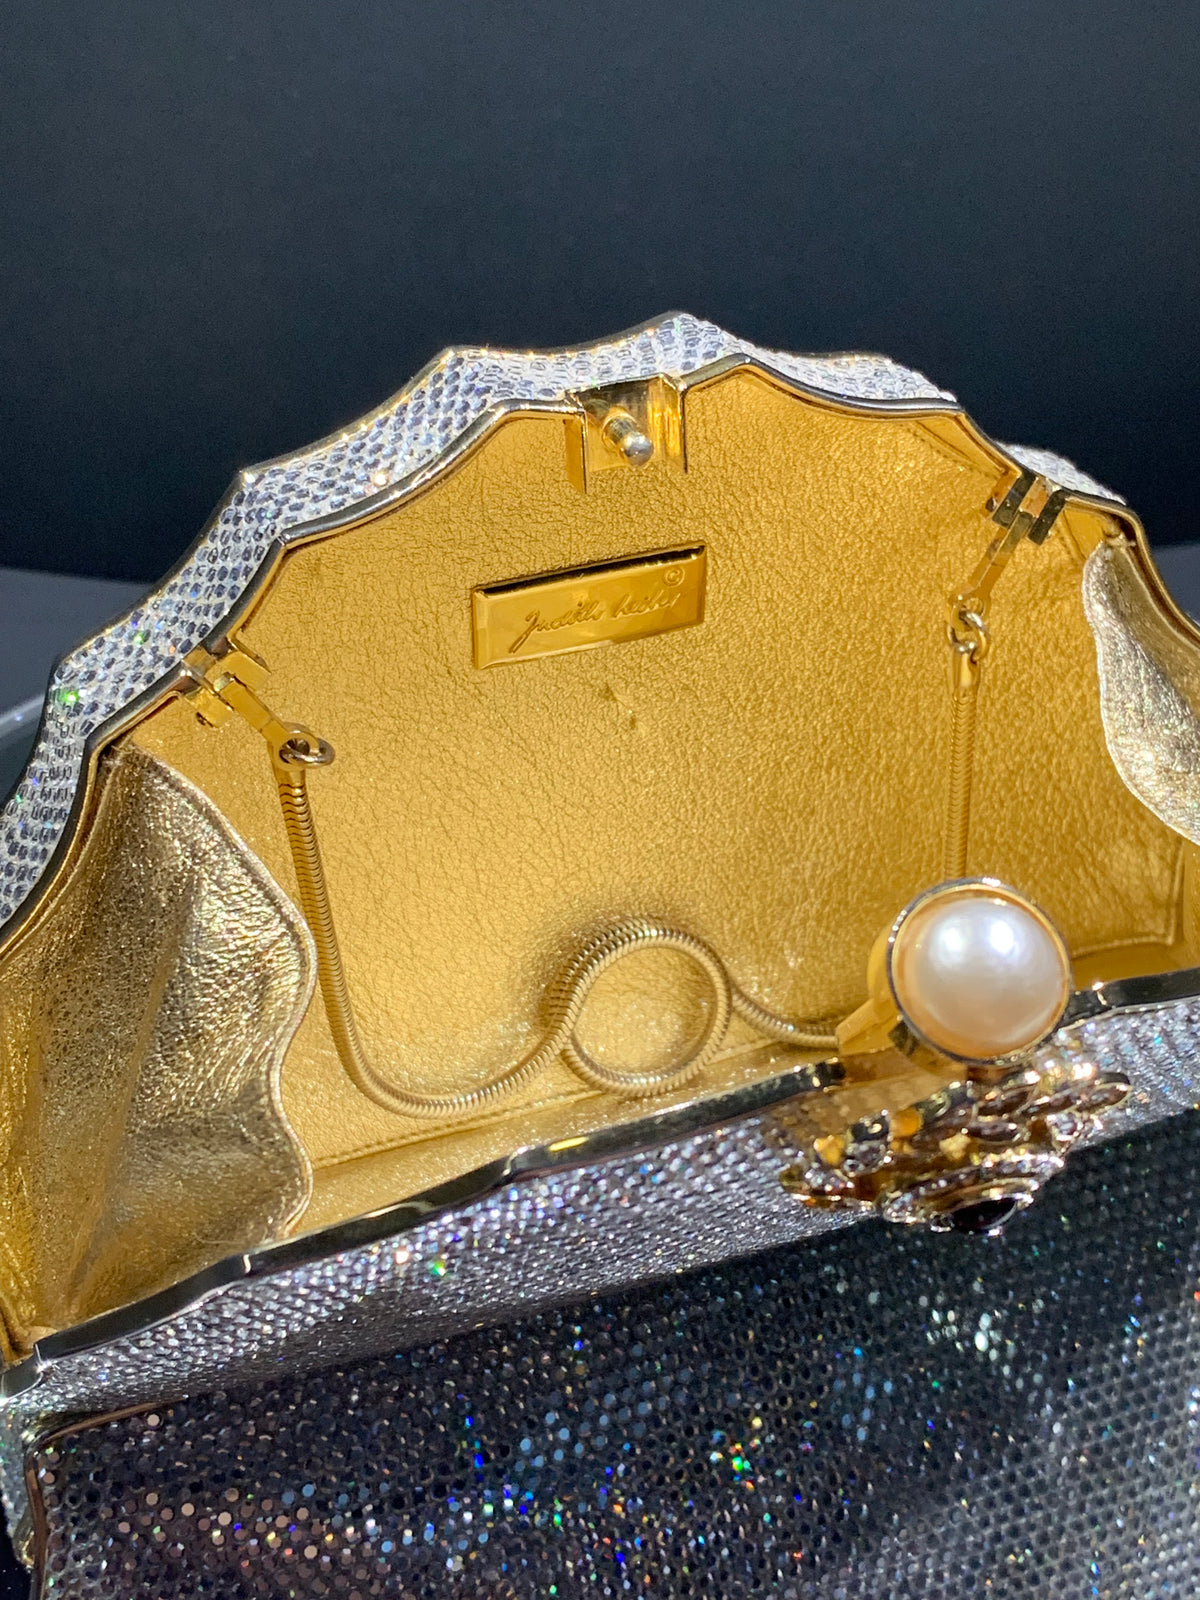 Silver Fan-Shaped Crystal Handbag by Judith Leiber